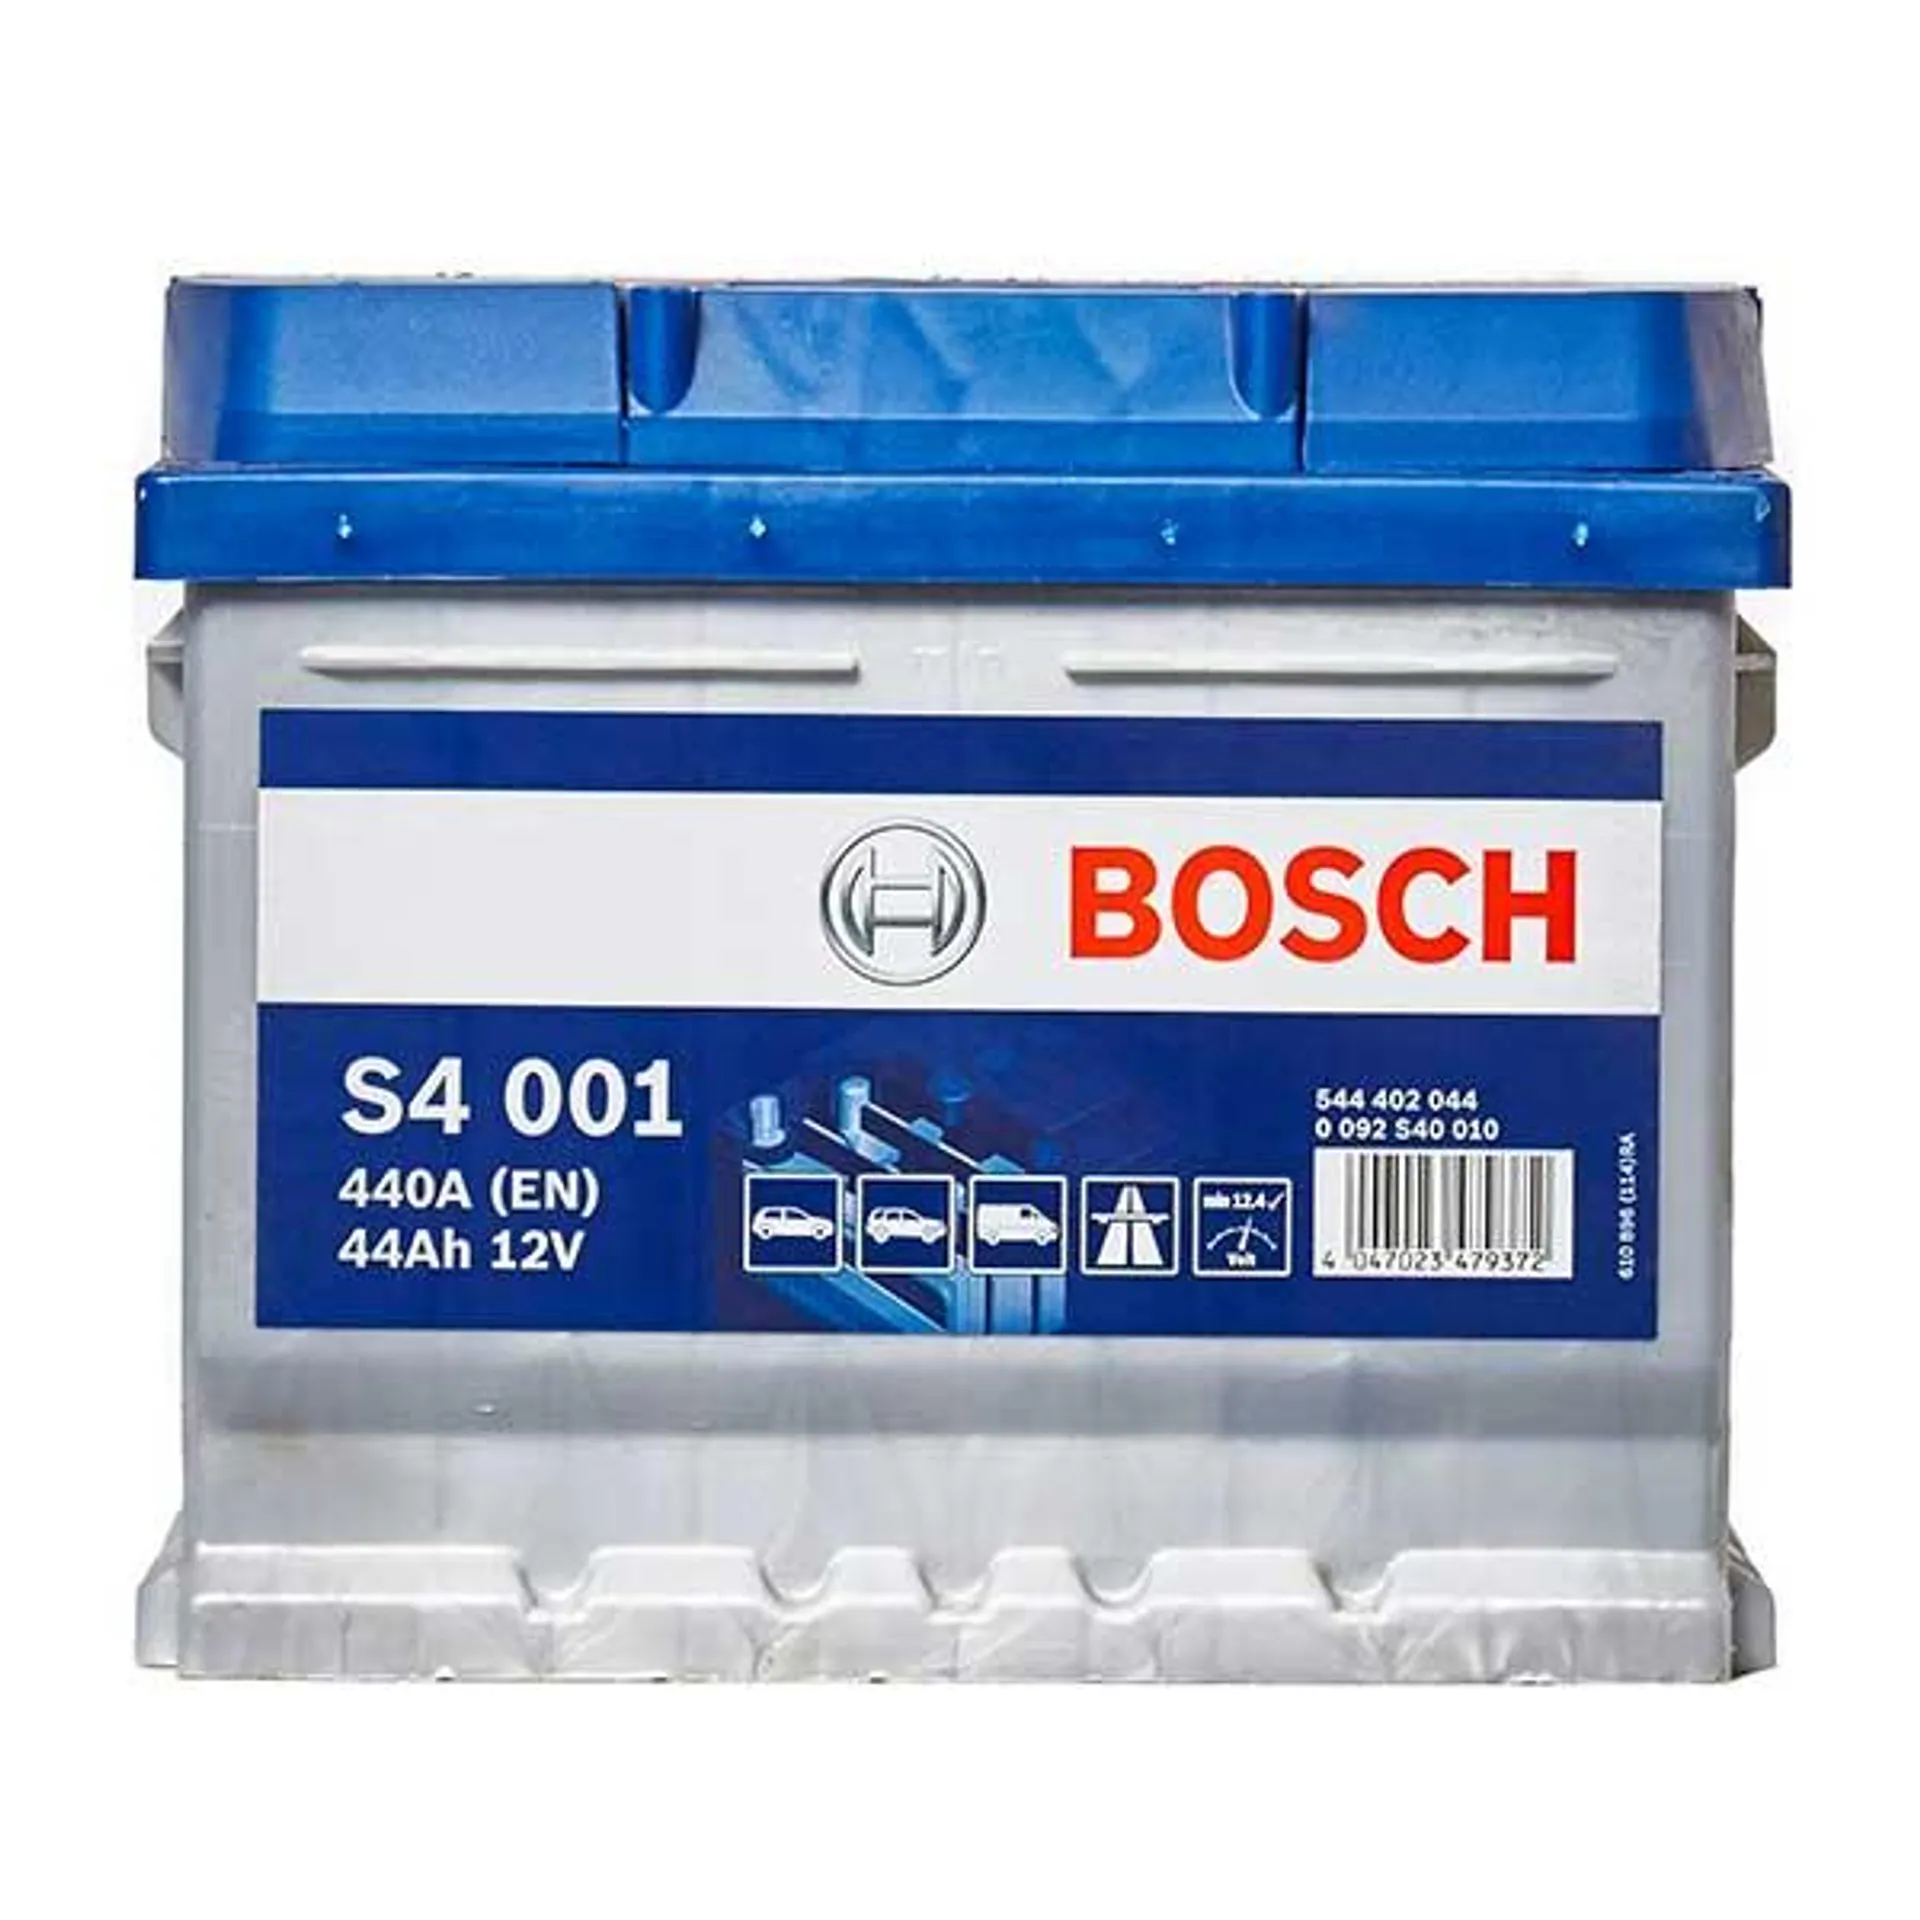 Bosch Car Battery 063 4 Year Guarantee